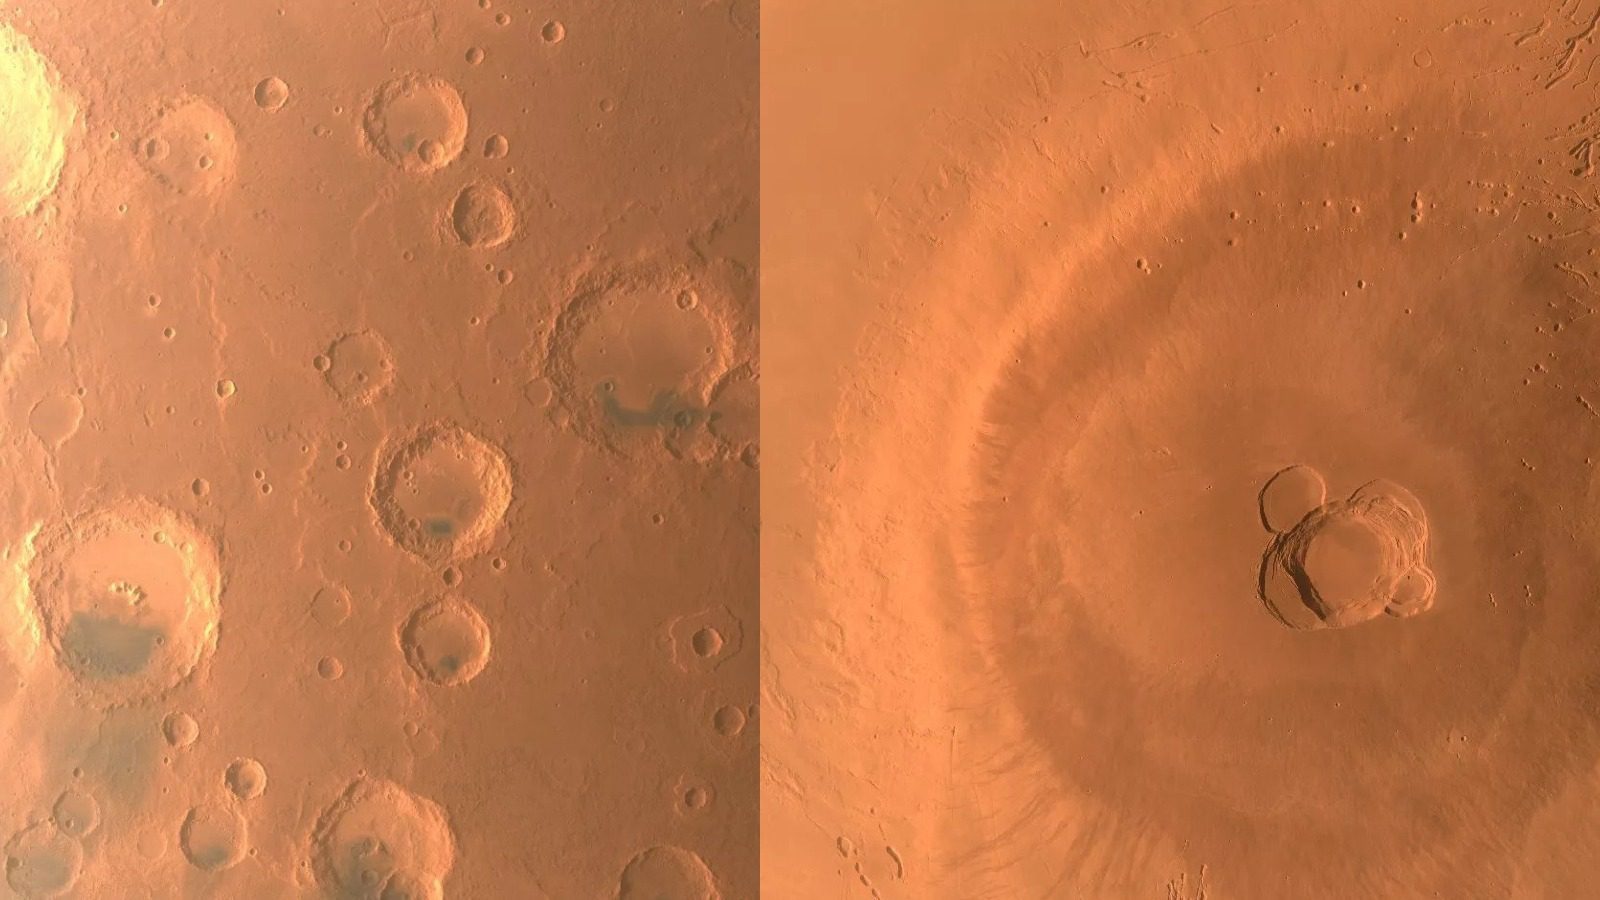 Tianwen-1 Mars